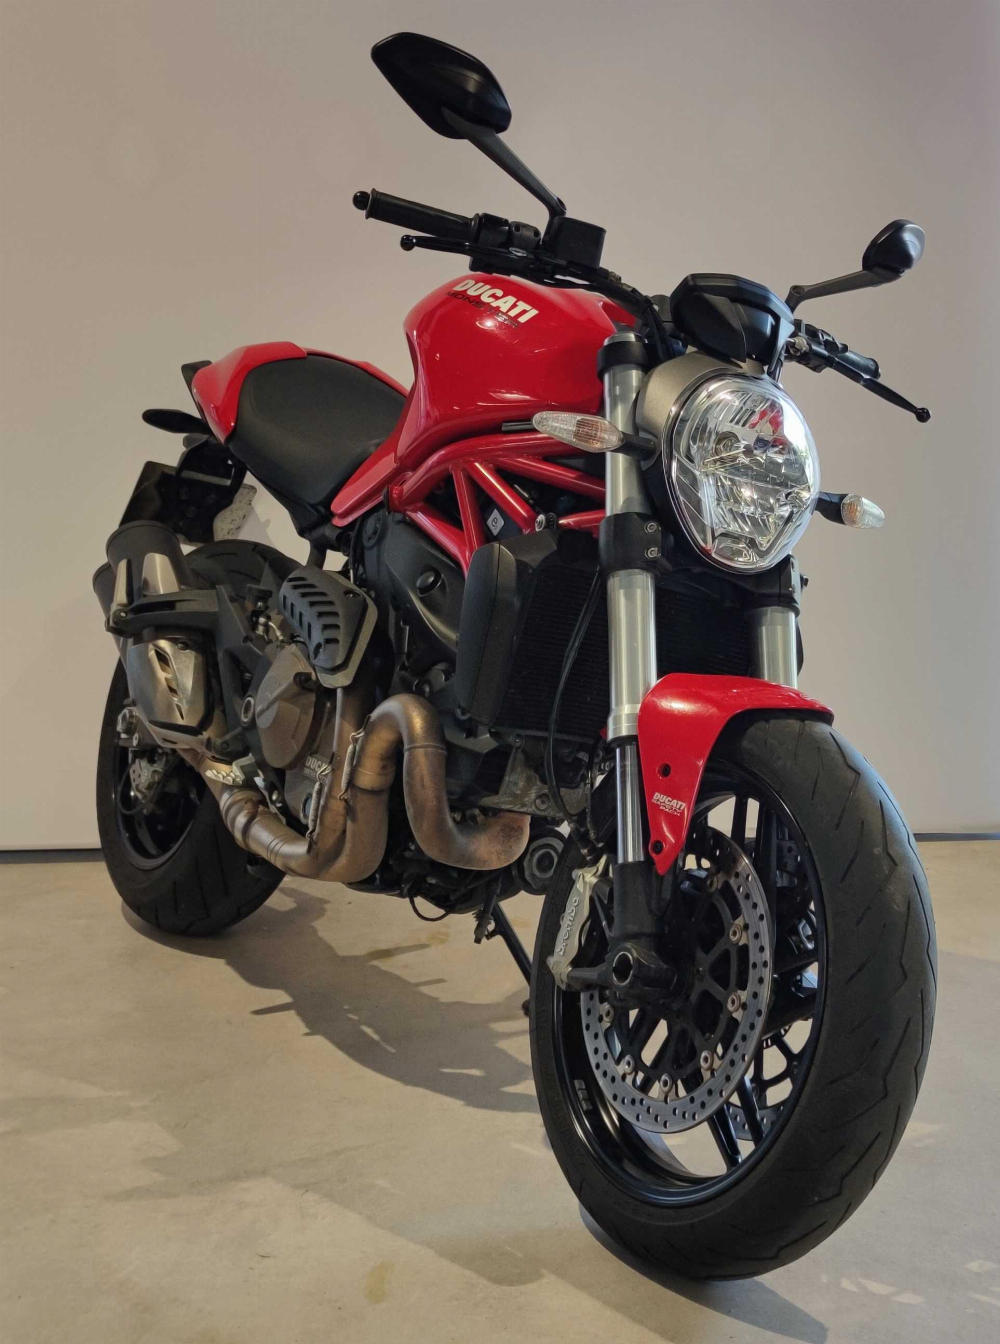 Ducati 821 Monster 2015 vue 3/4 droite